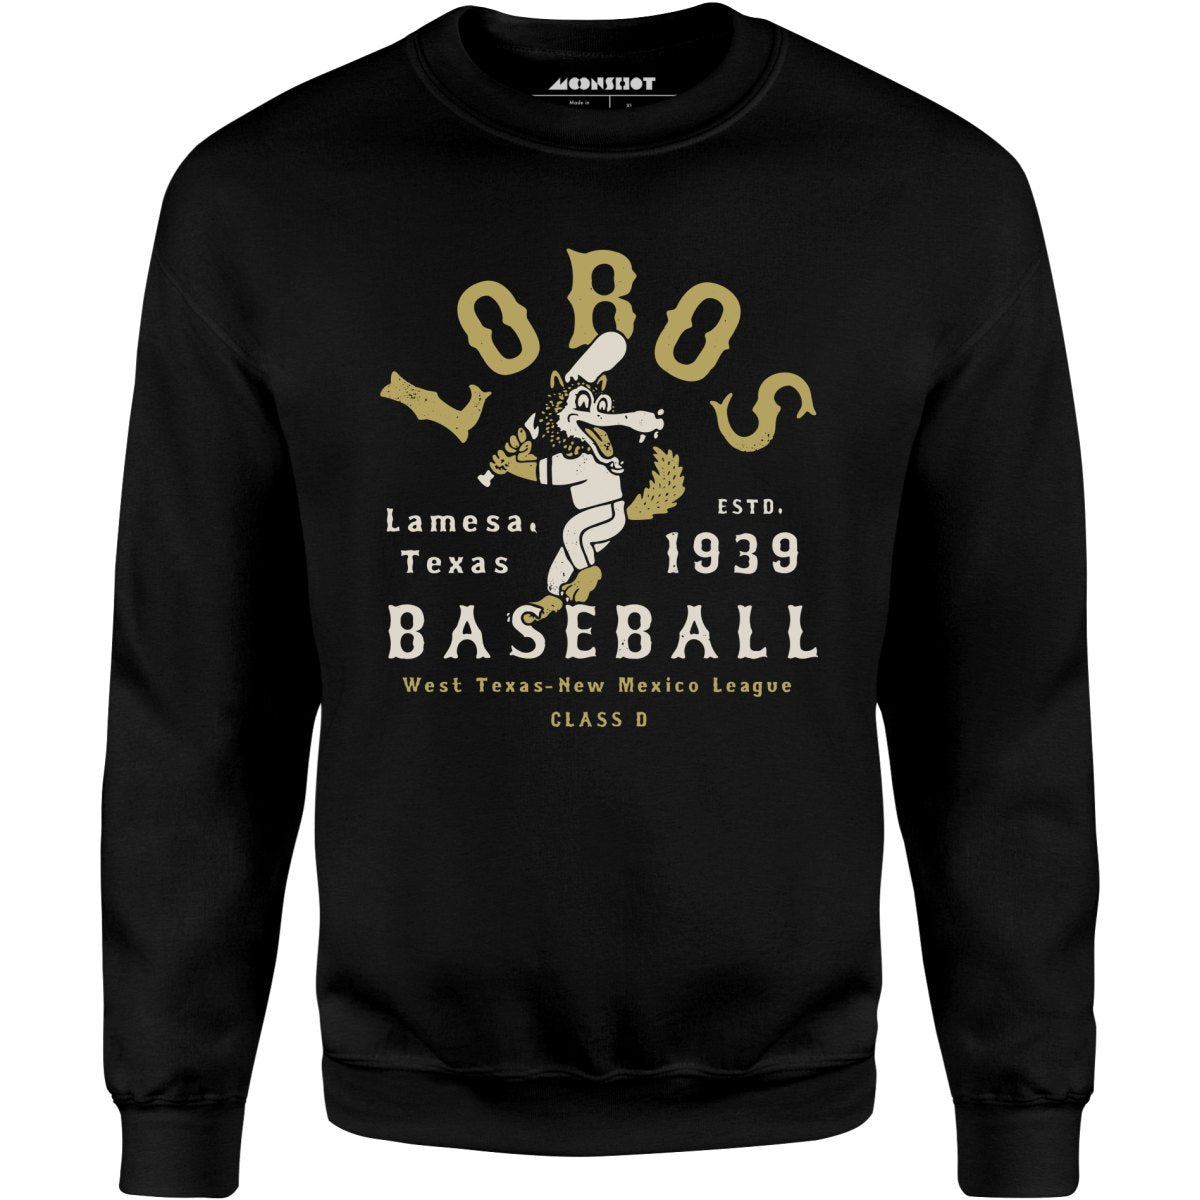 Lamesa Lobos - Texas - Vintage Defunct Baseball Teams - Unisex Sweatshirt